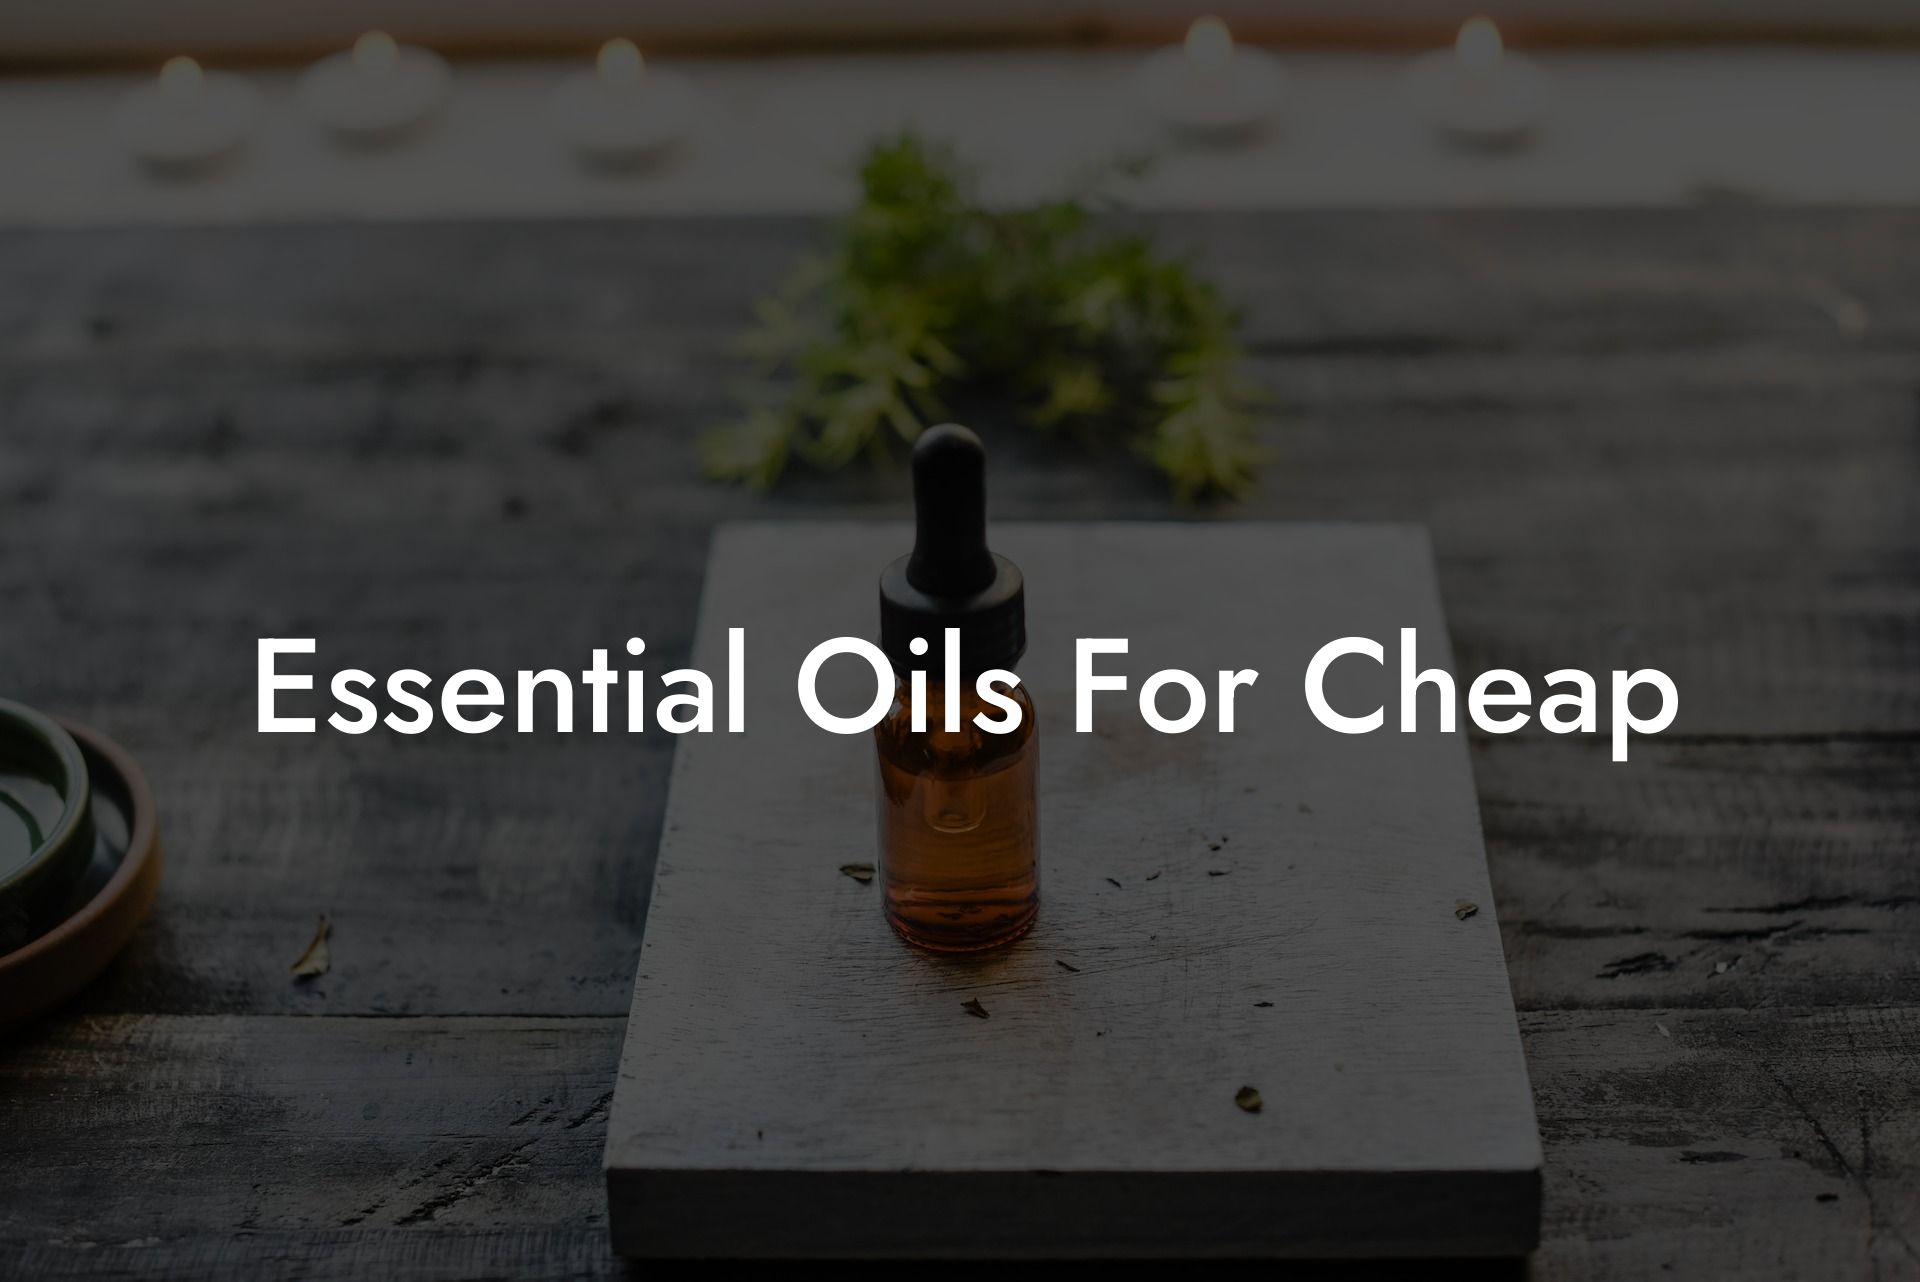 Essential Oils For Cheap